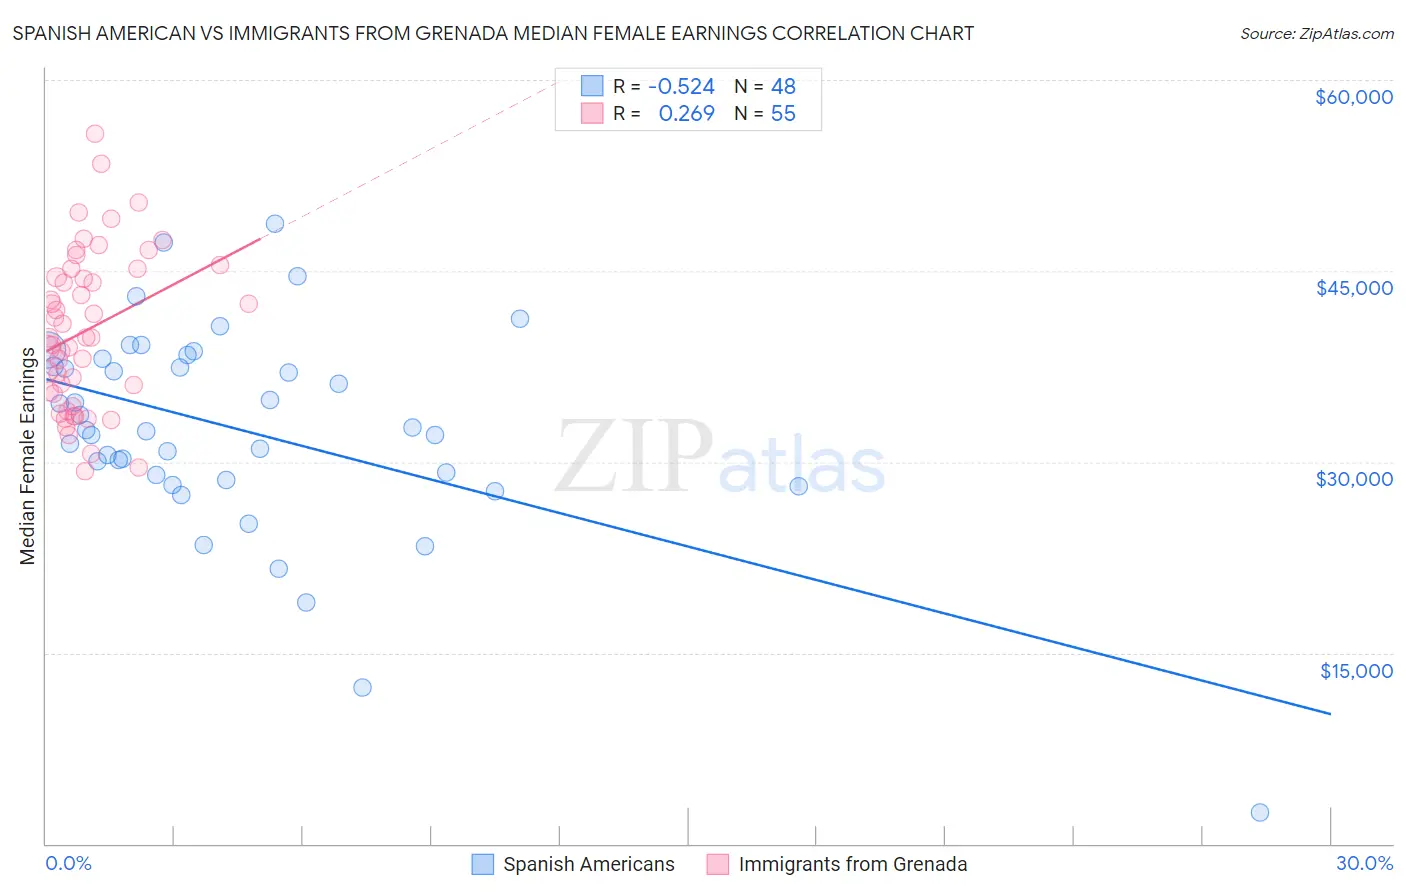 Spanish American vs Immigrants from Grenada Median Female Earnings